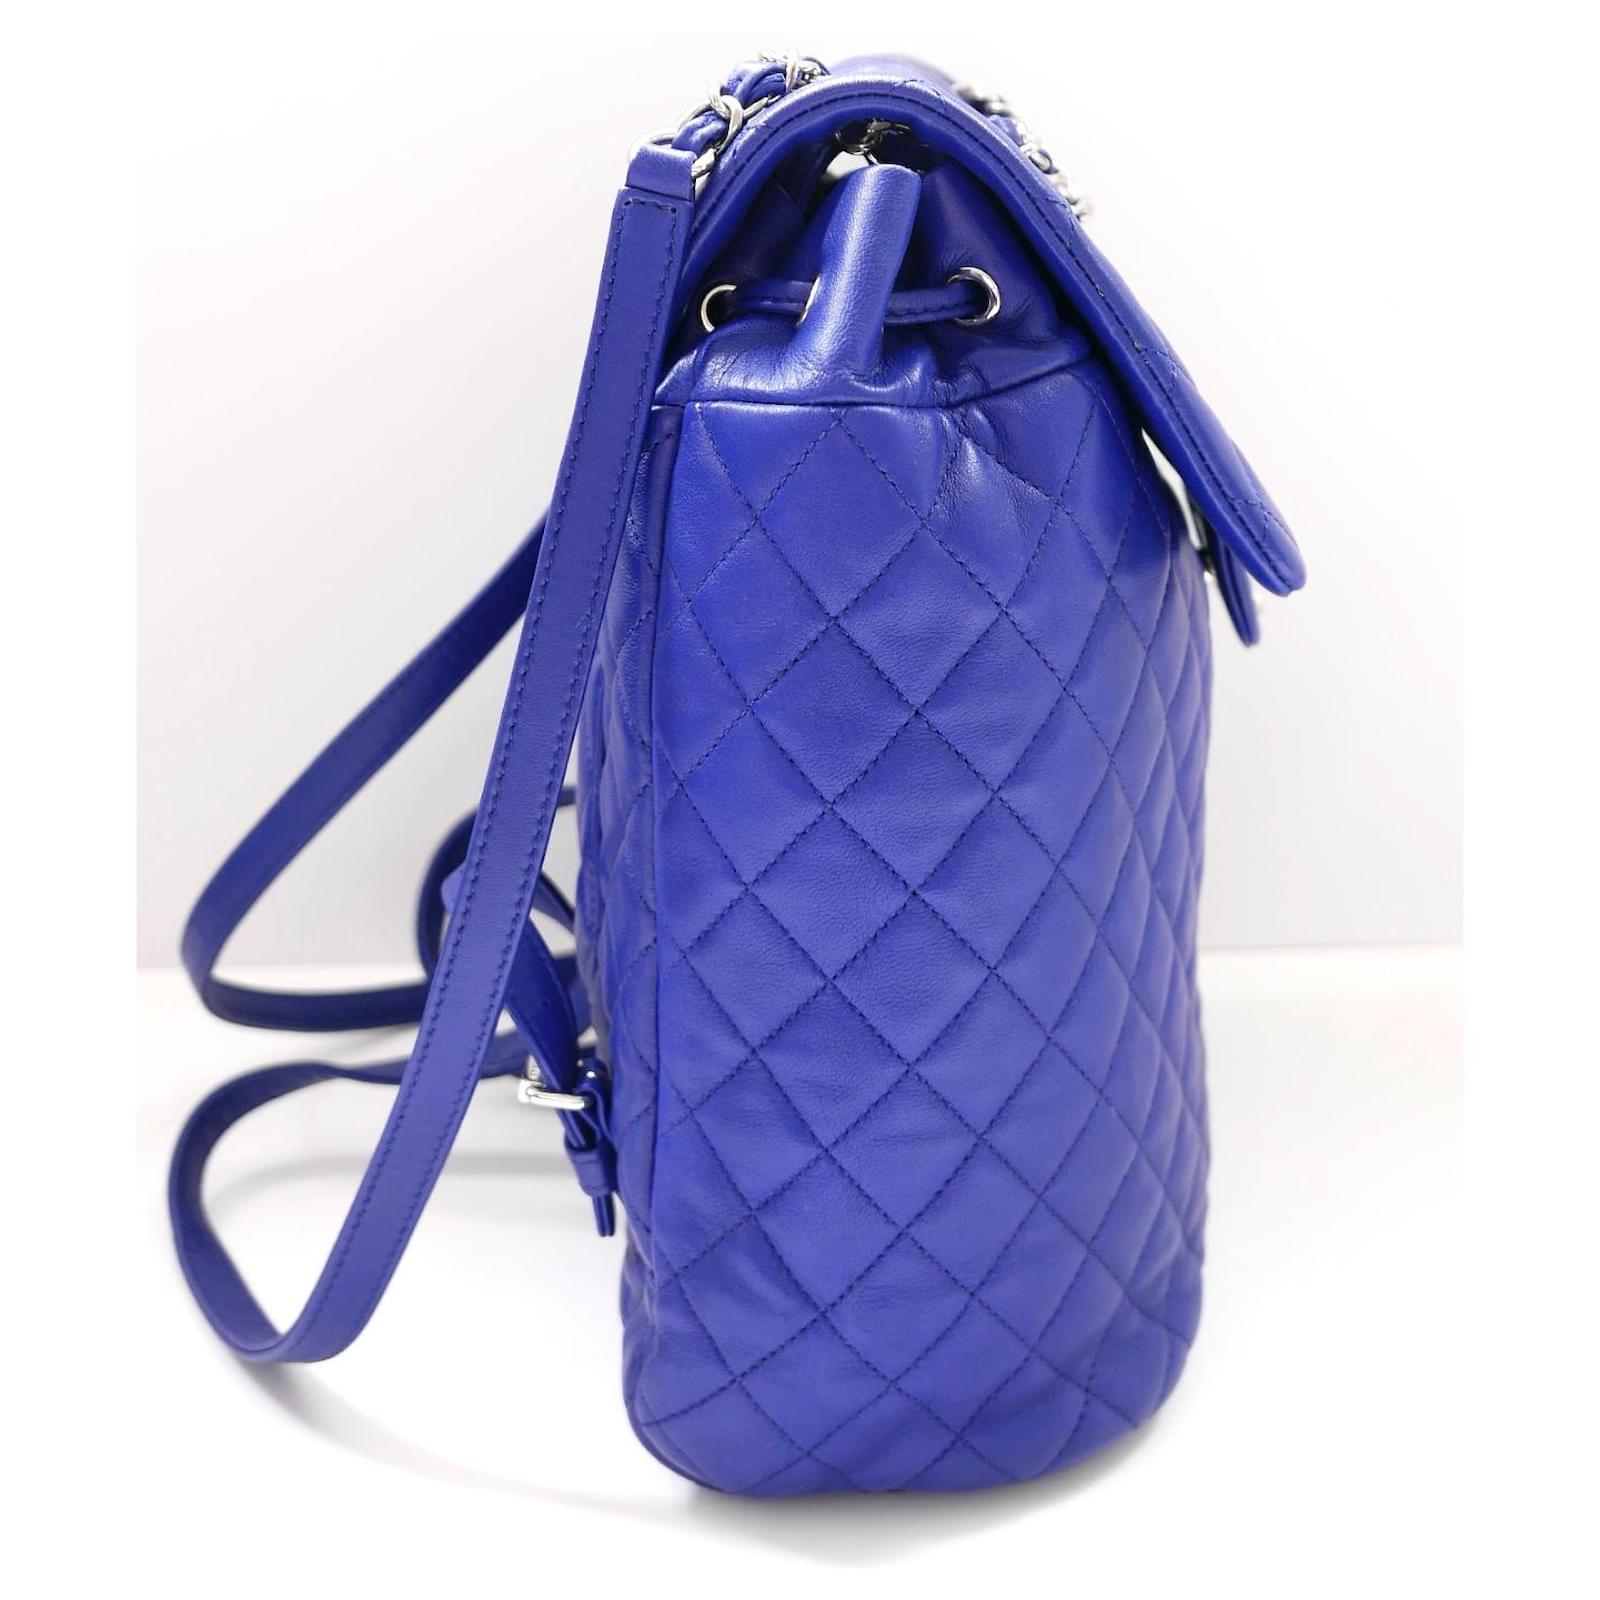 Backpacks Chanel Chanel Urban Spirit Backpack Blue Lamb Leather